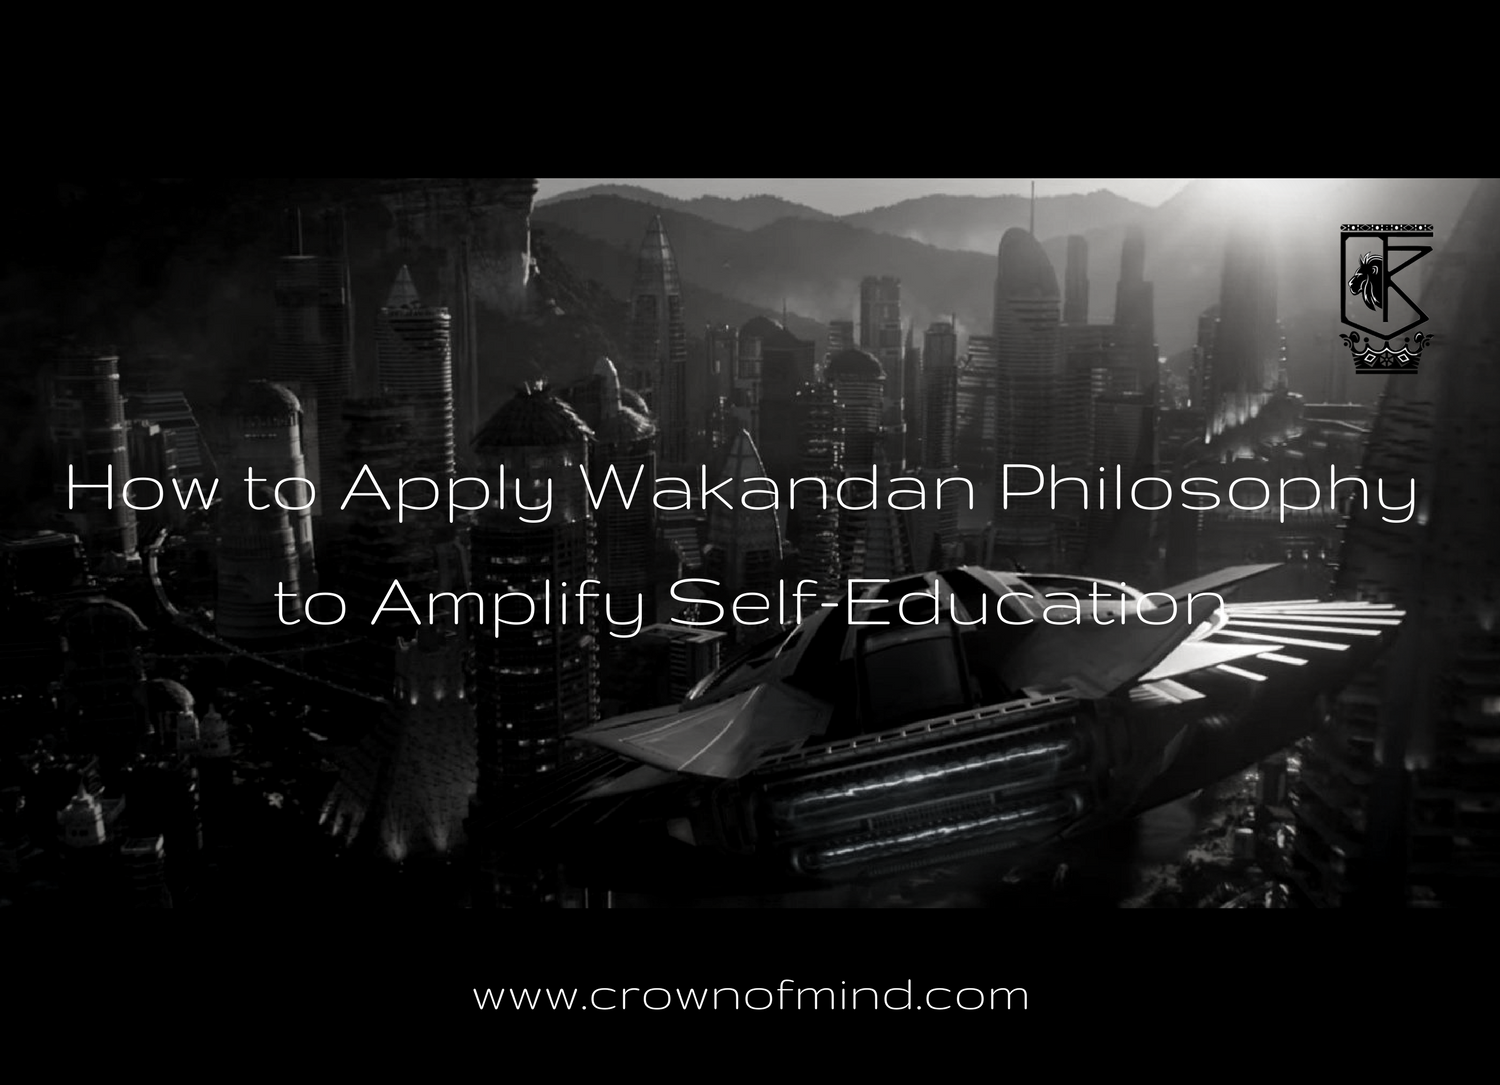 How to Apply Wakandan Philosophy to Amplify Self-Education